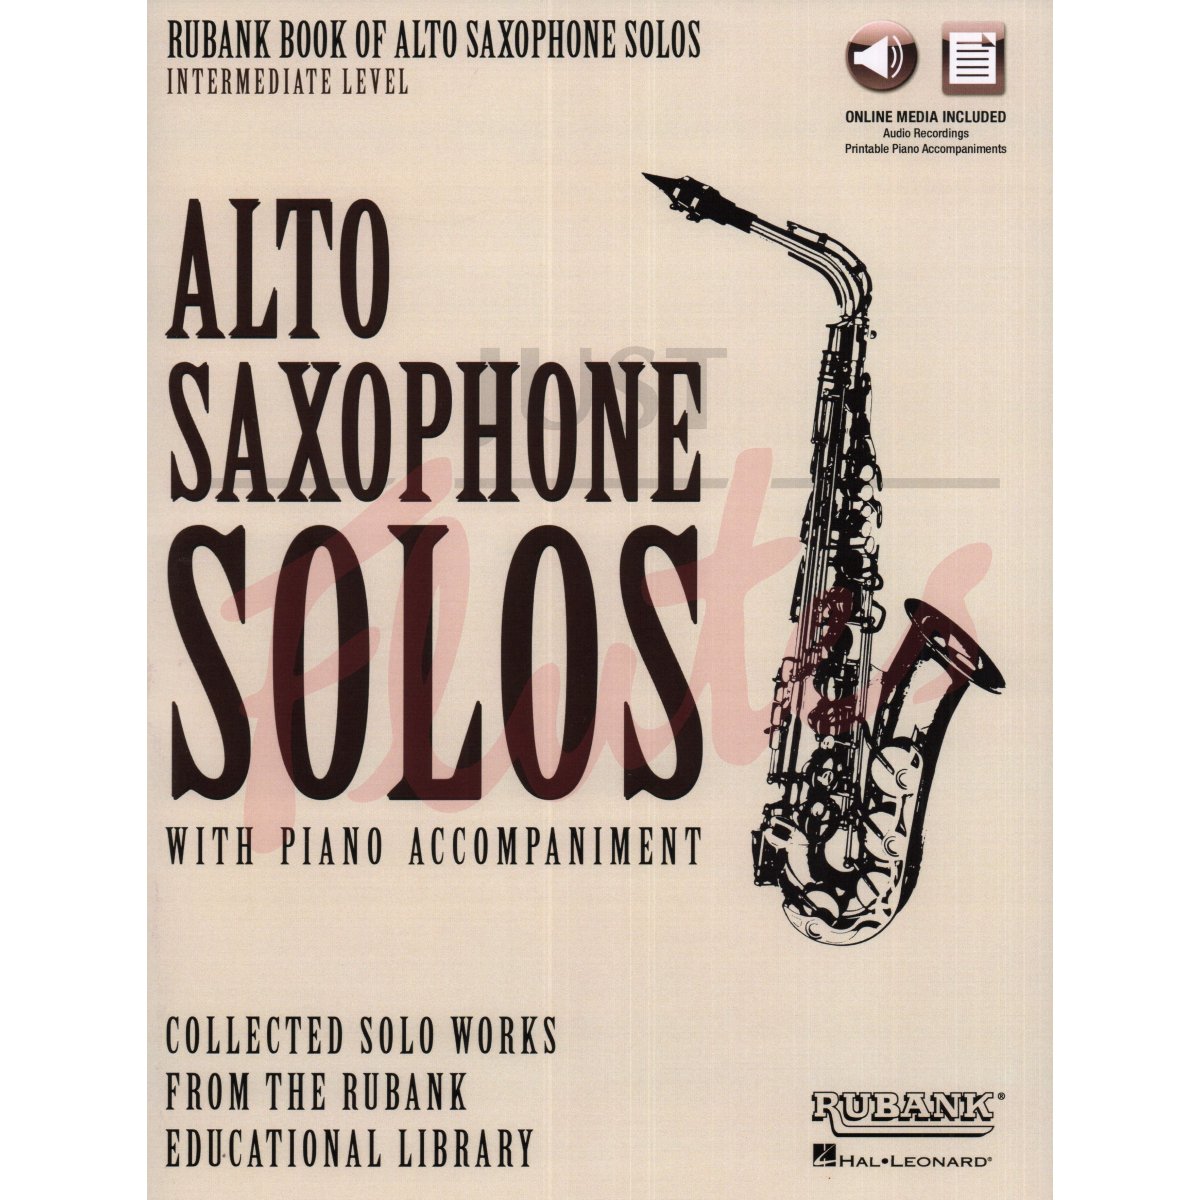 Rubank Book of Alto Saxophone Solos with Piano Accompaniment Download - Intermediate Level